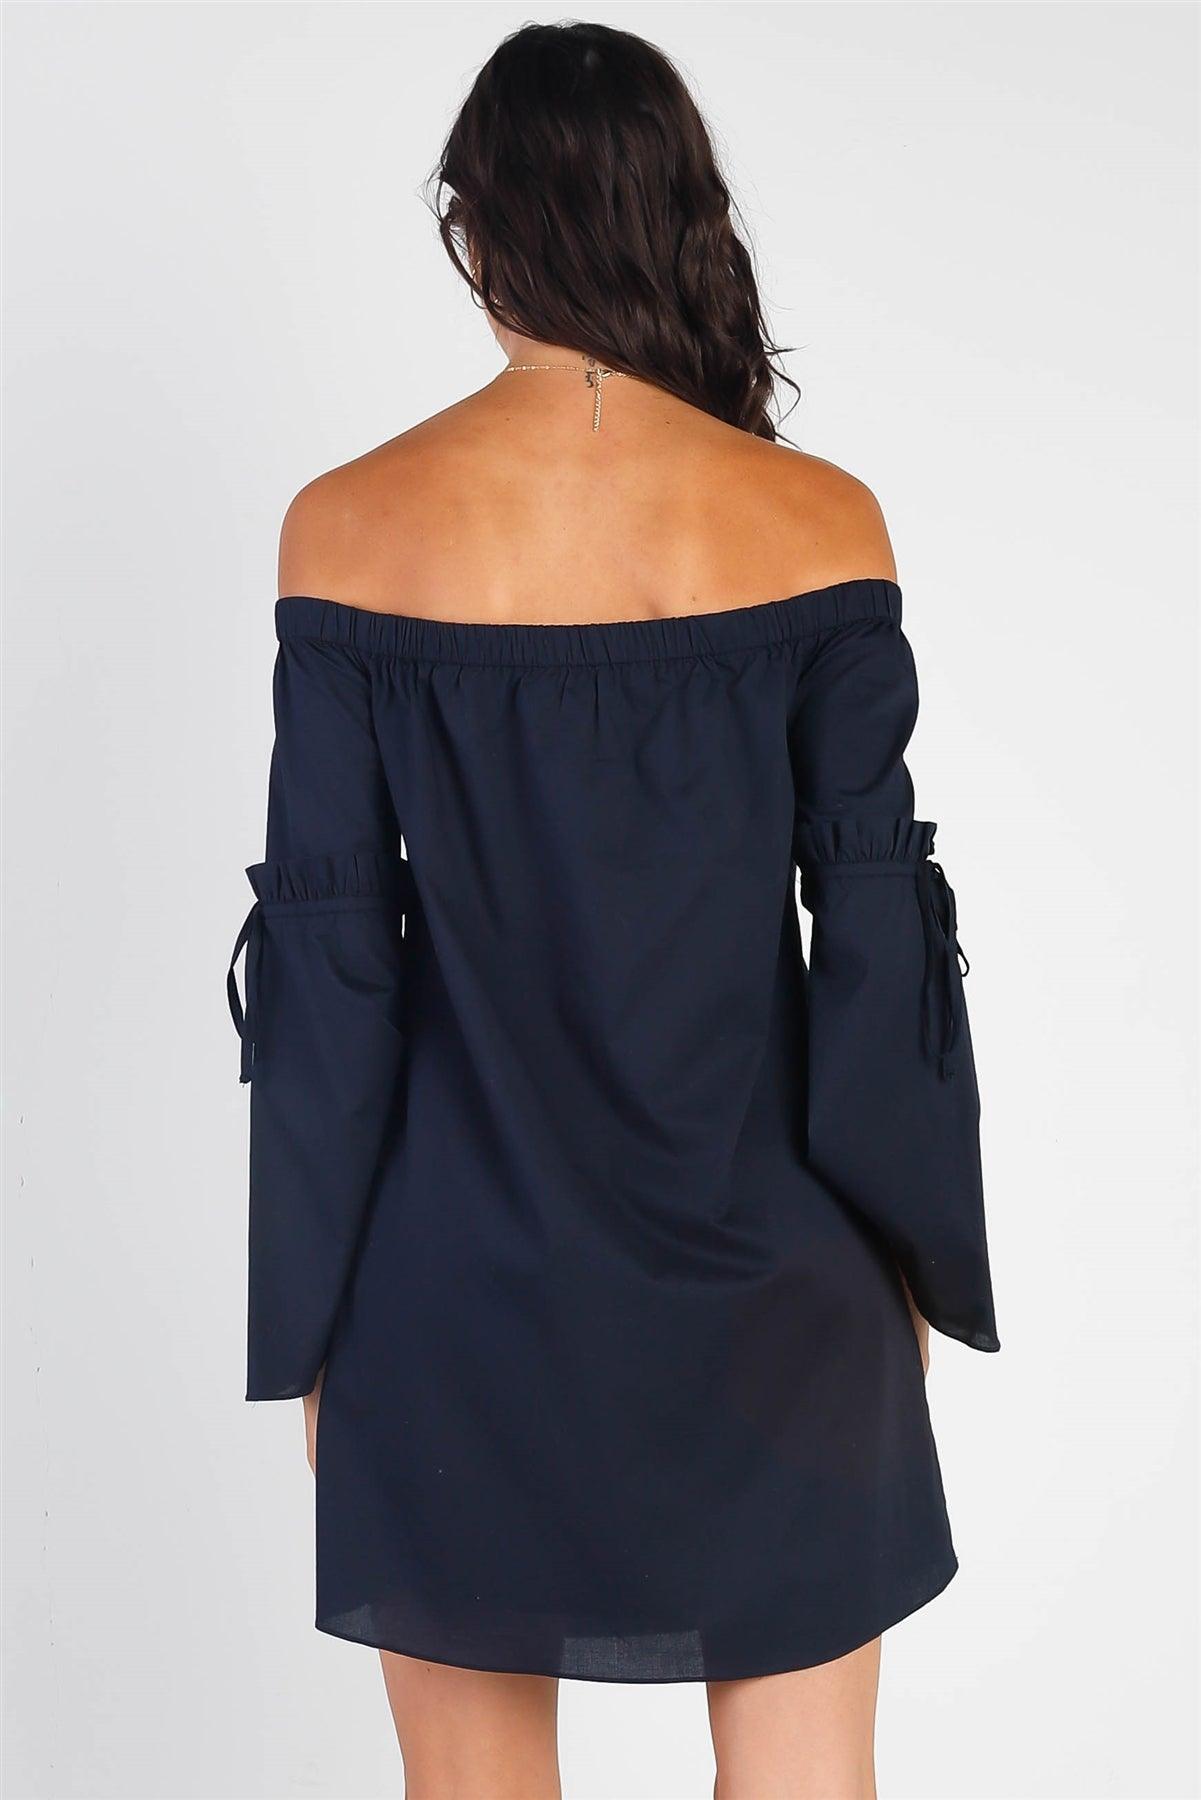 Navy Blue Loose Fit Off-The-Shoulder Self-Tie Frill Trim Angel Sleeve Mini Dress /1-2-2-1